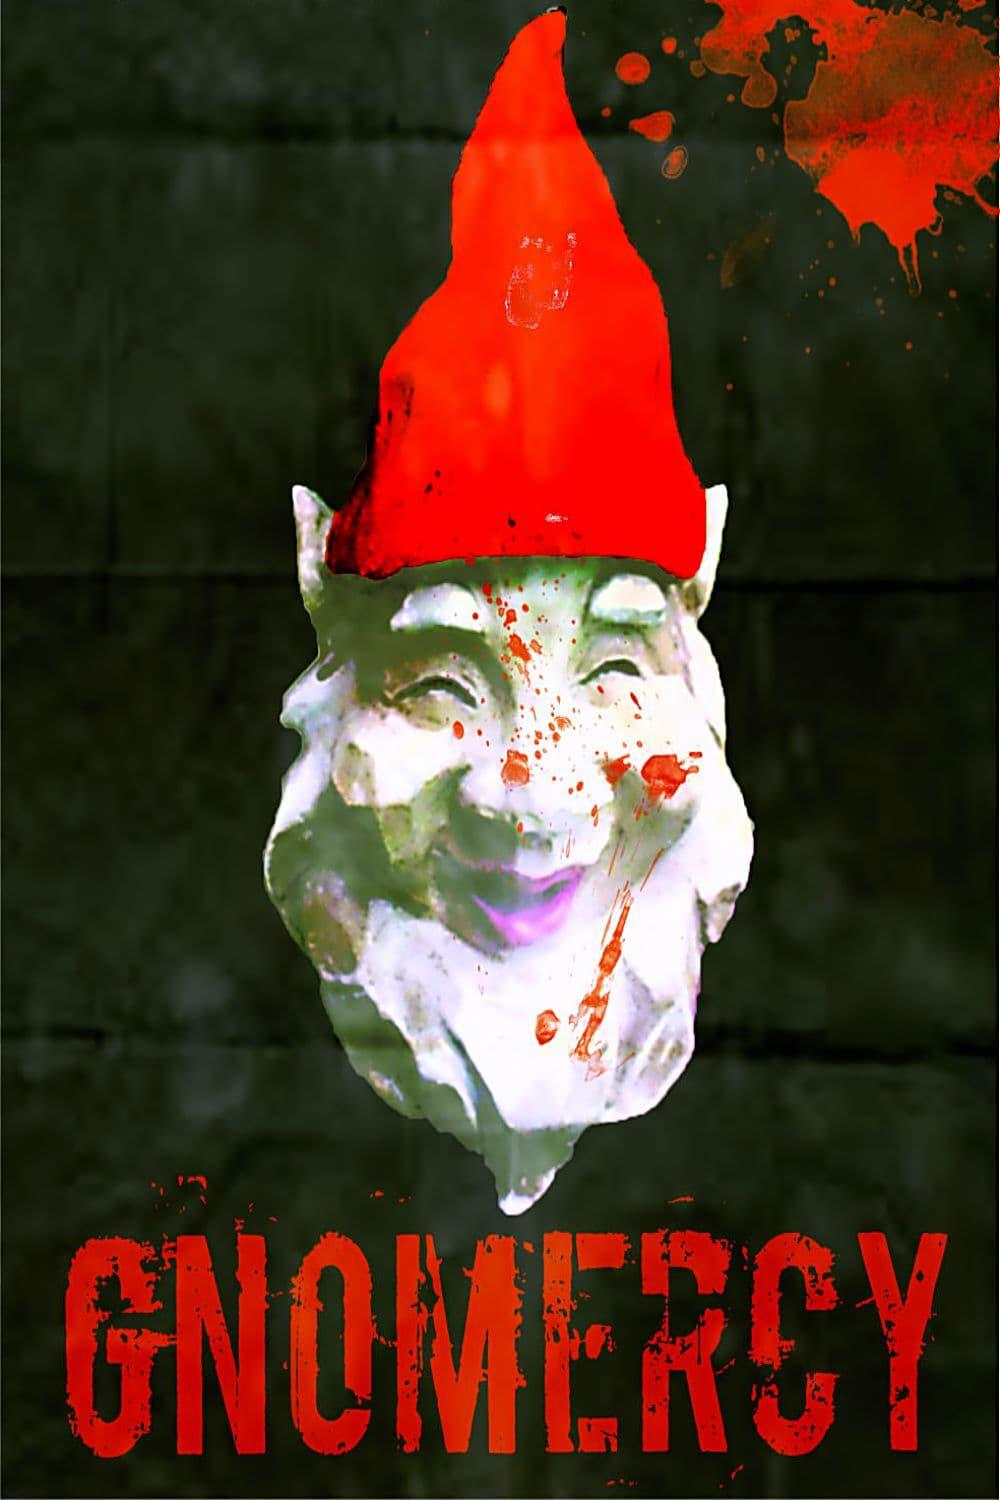 Gnomercy poster